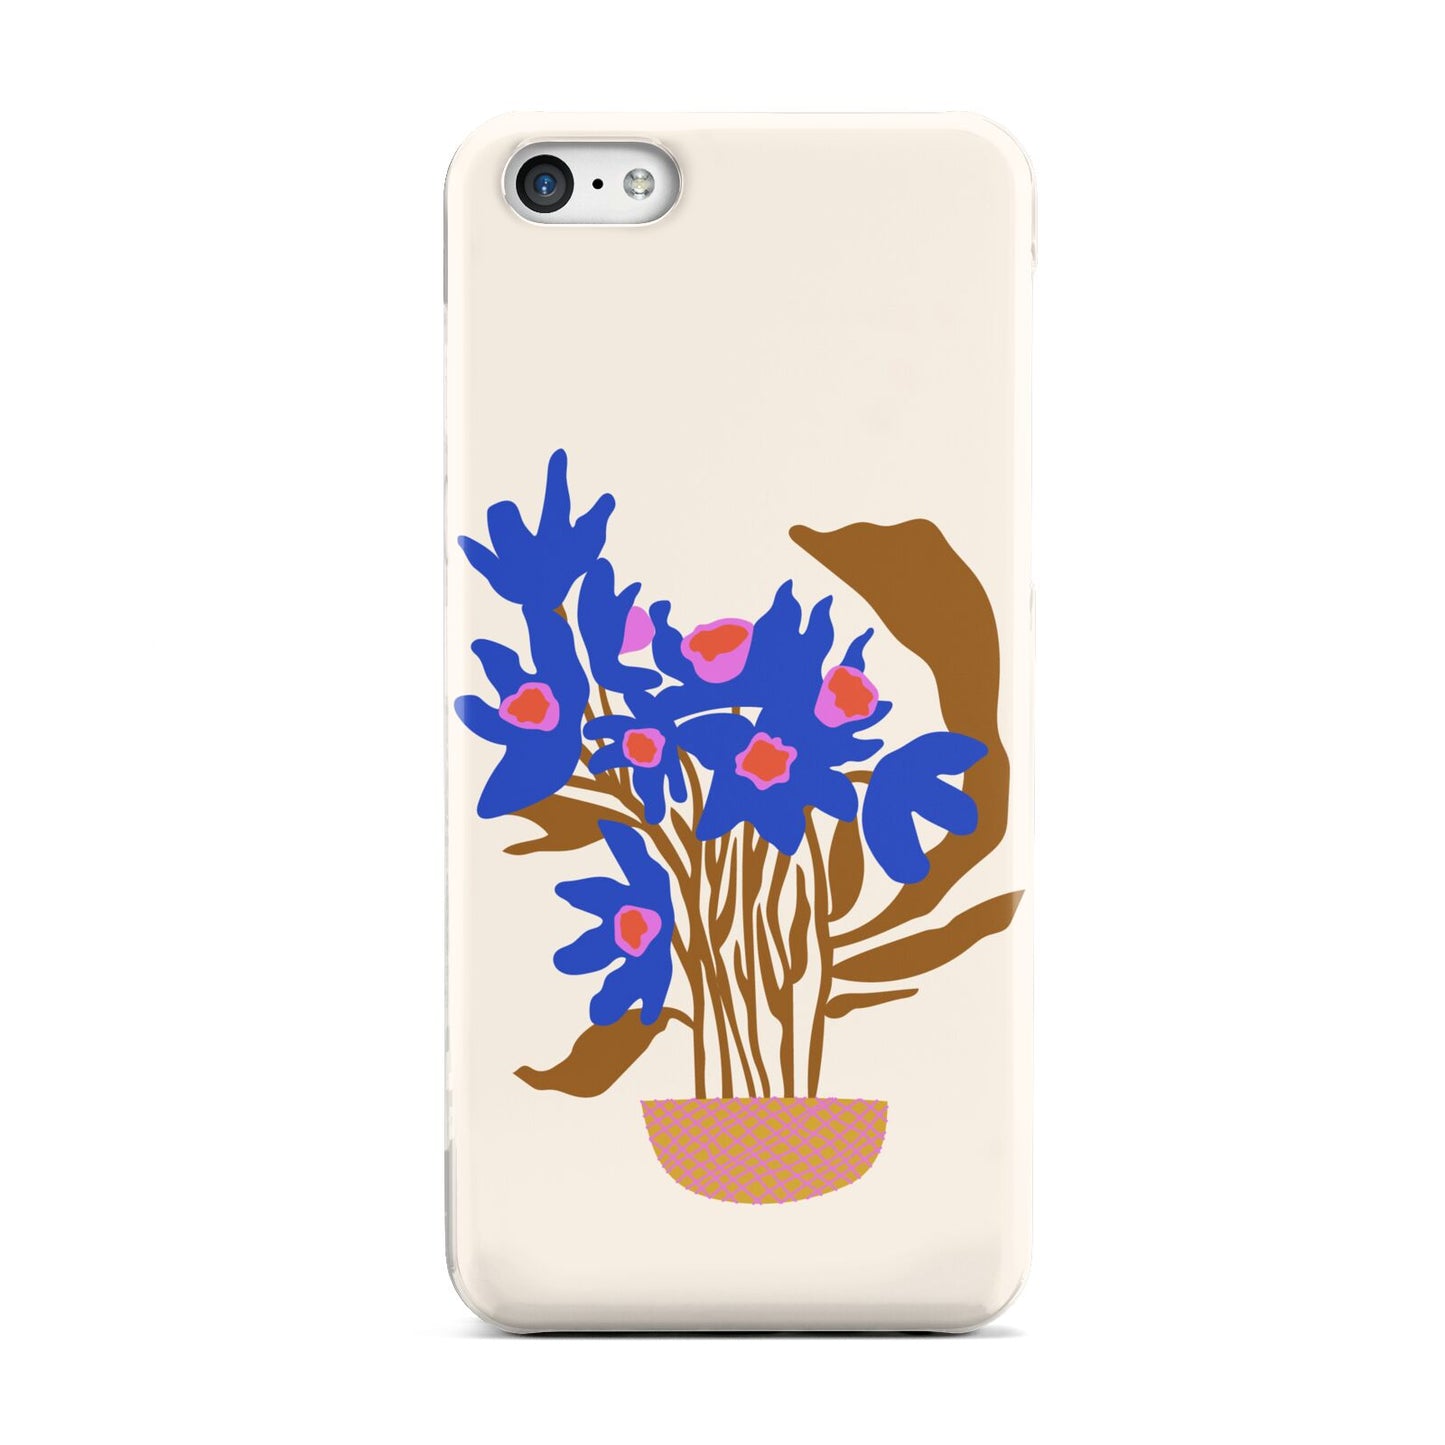 Flowers in a Vase Apple iPhone 5c Case